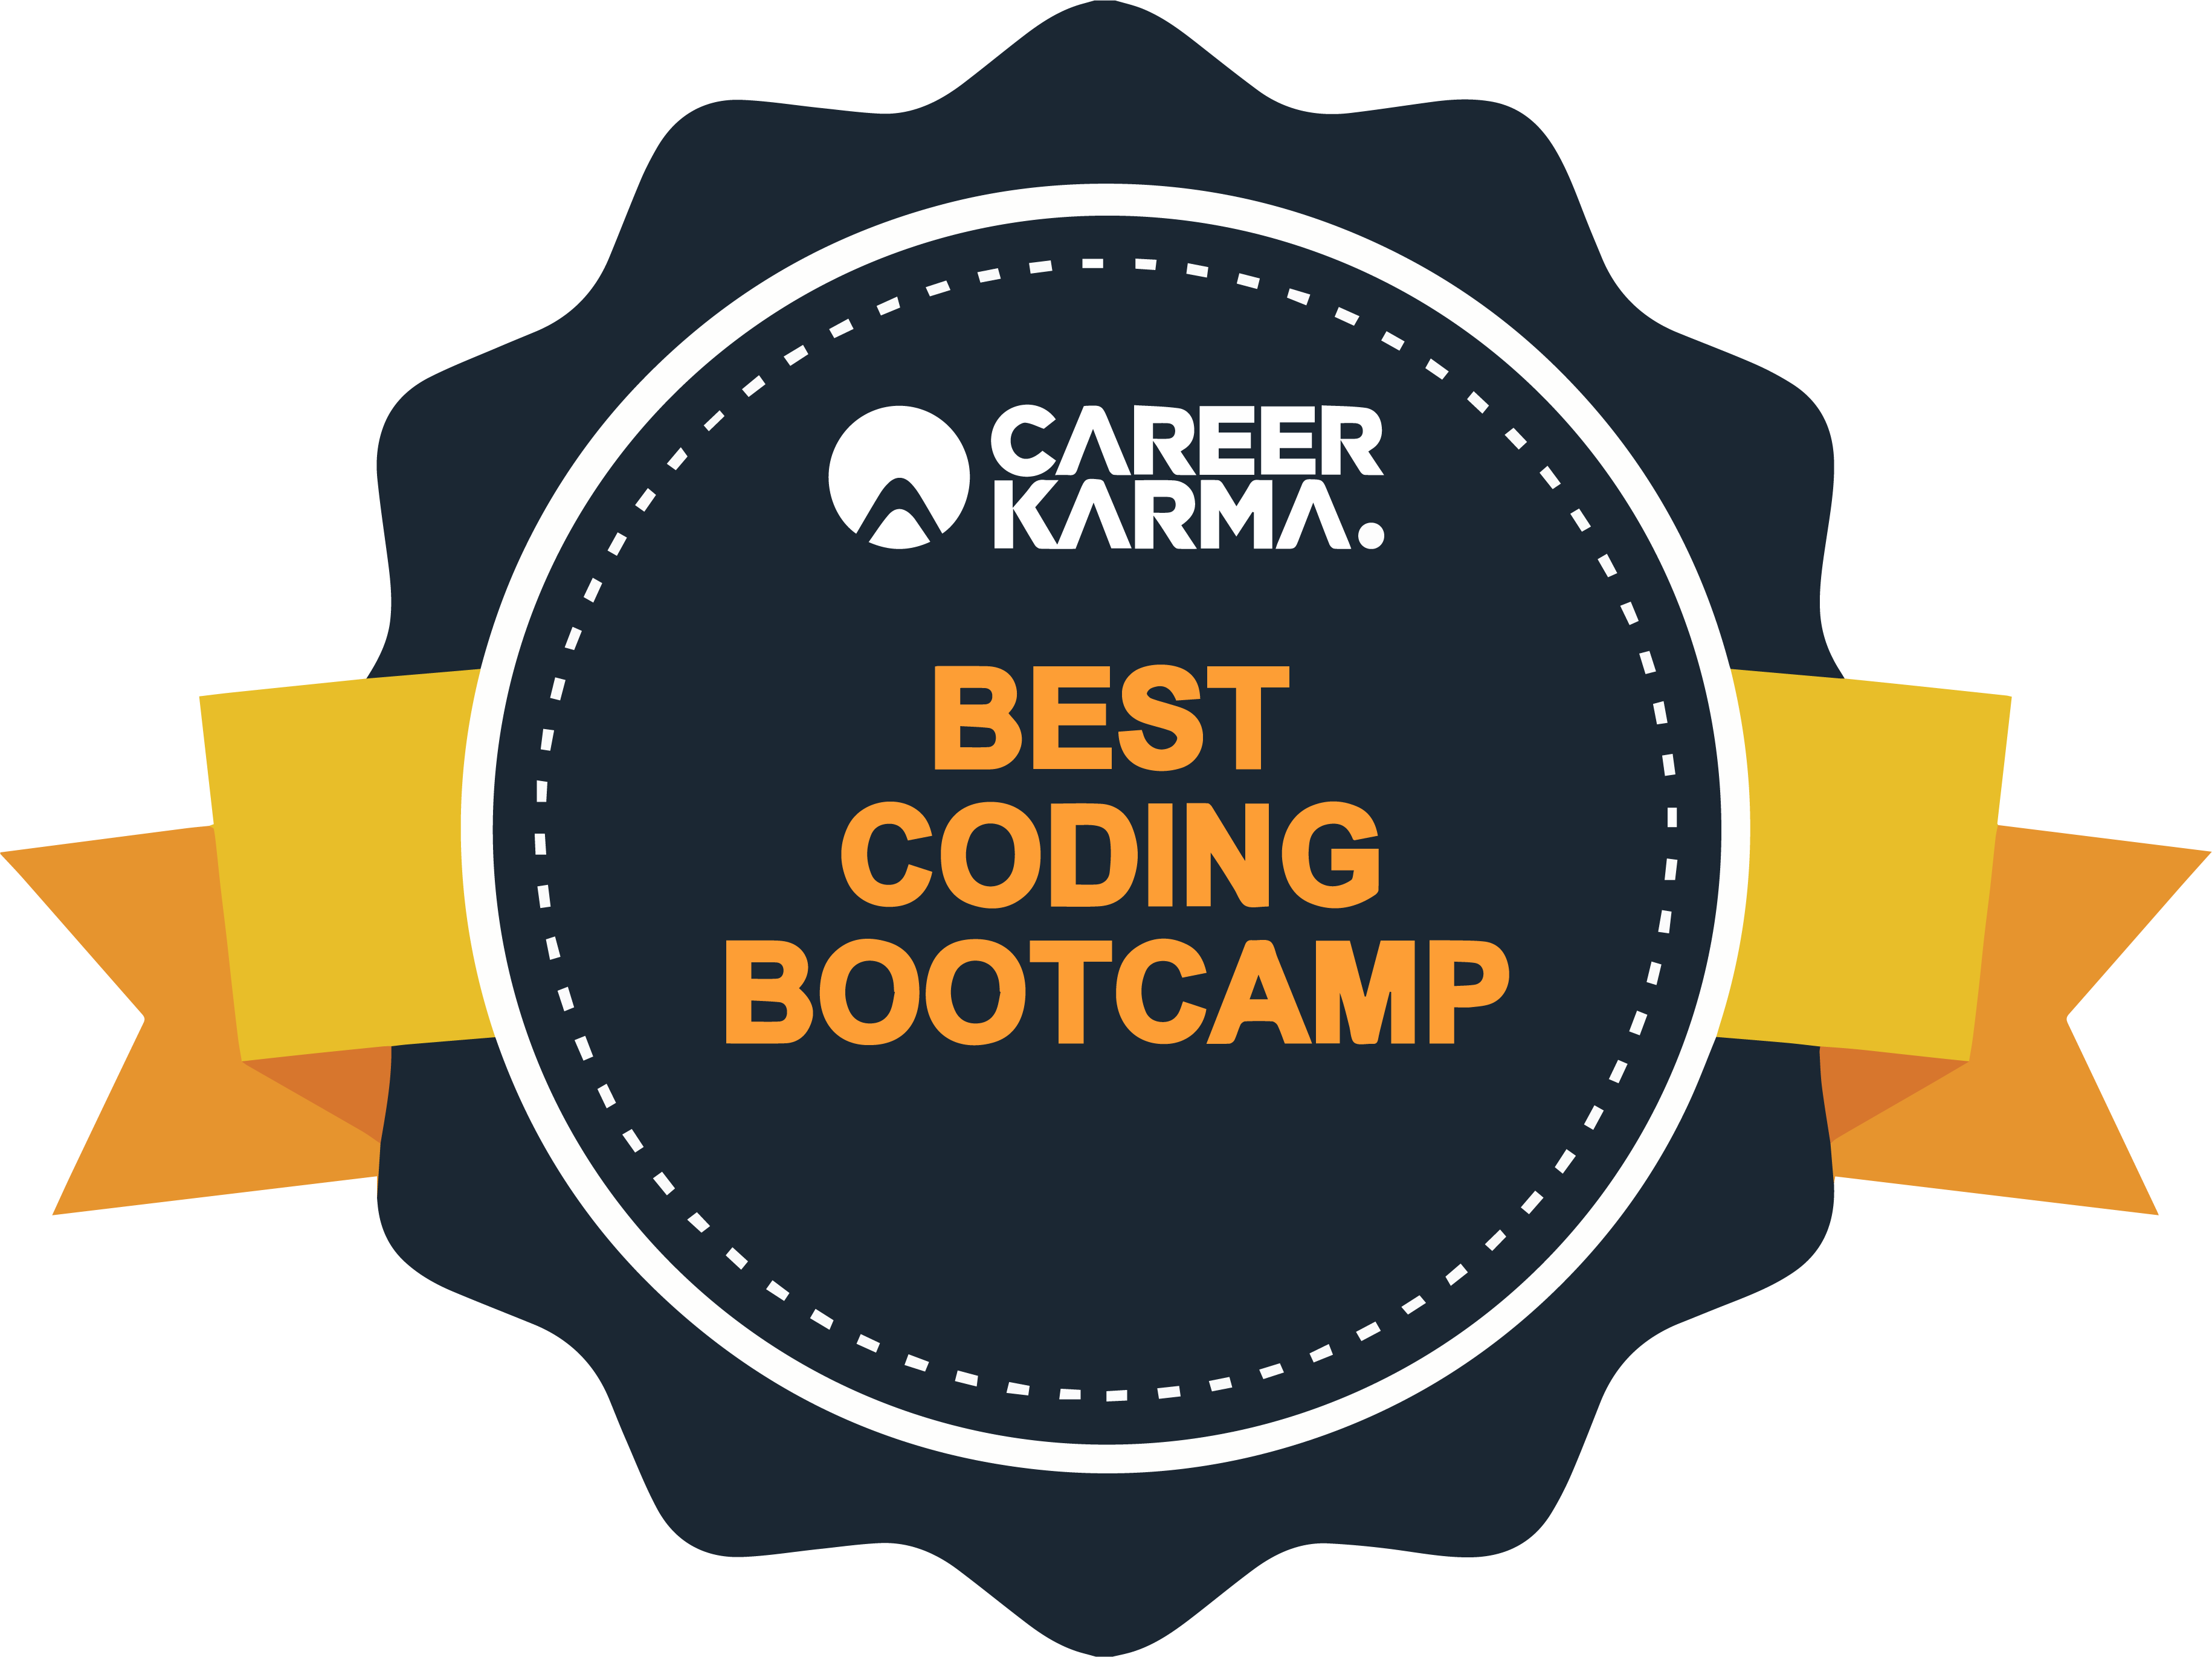 The Tech Academy Best Coding Bootcamp award list from CareerKarma.com, for Portland, Oregon and Salt Lake City, Utah